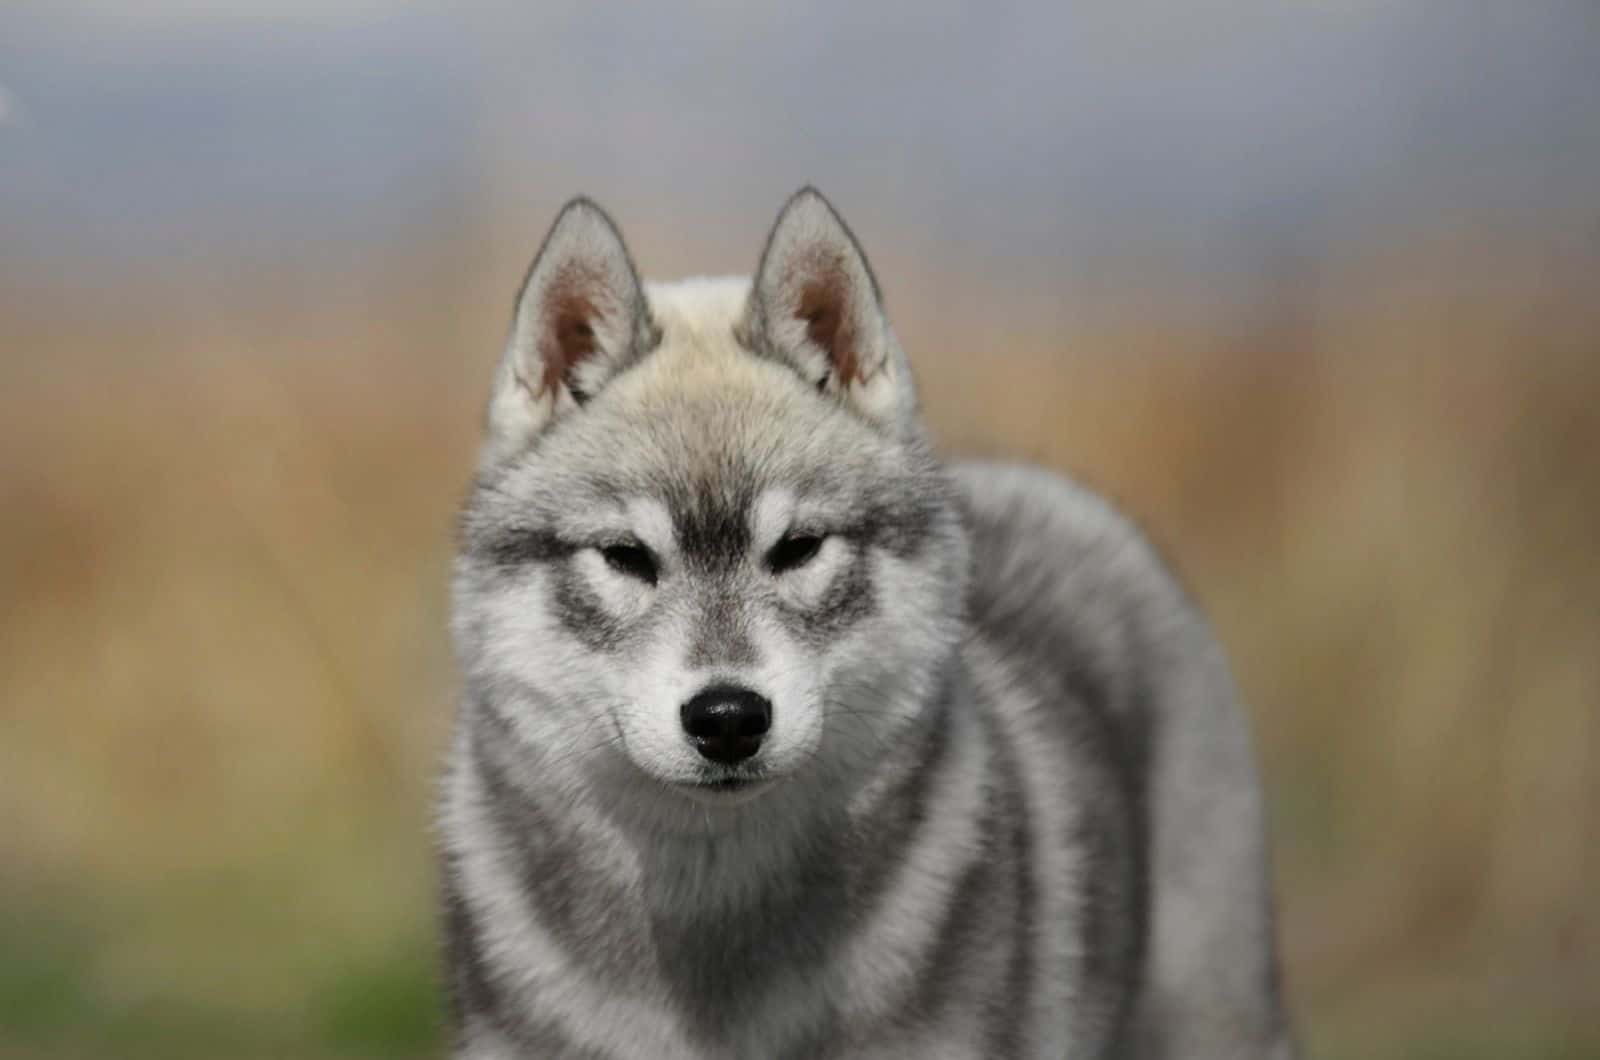 Agouti siberian husky dog standing outdoor